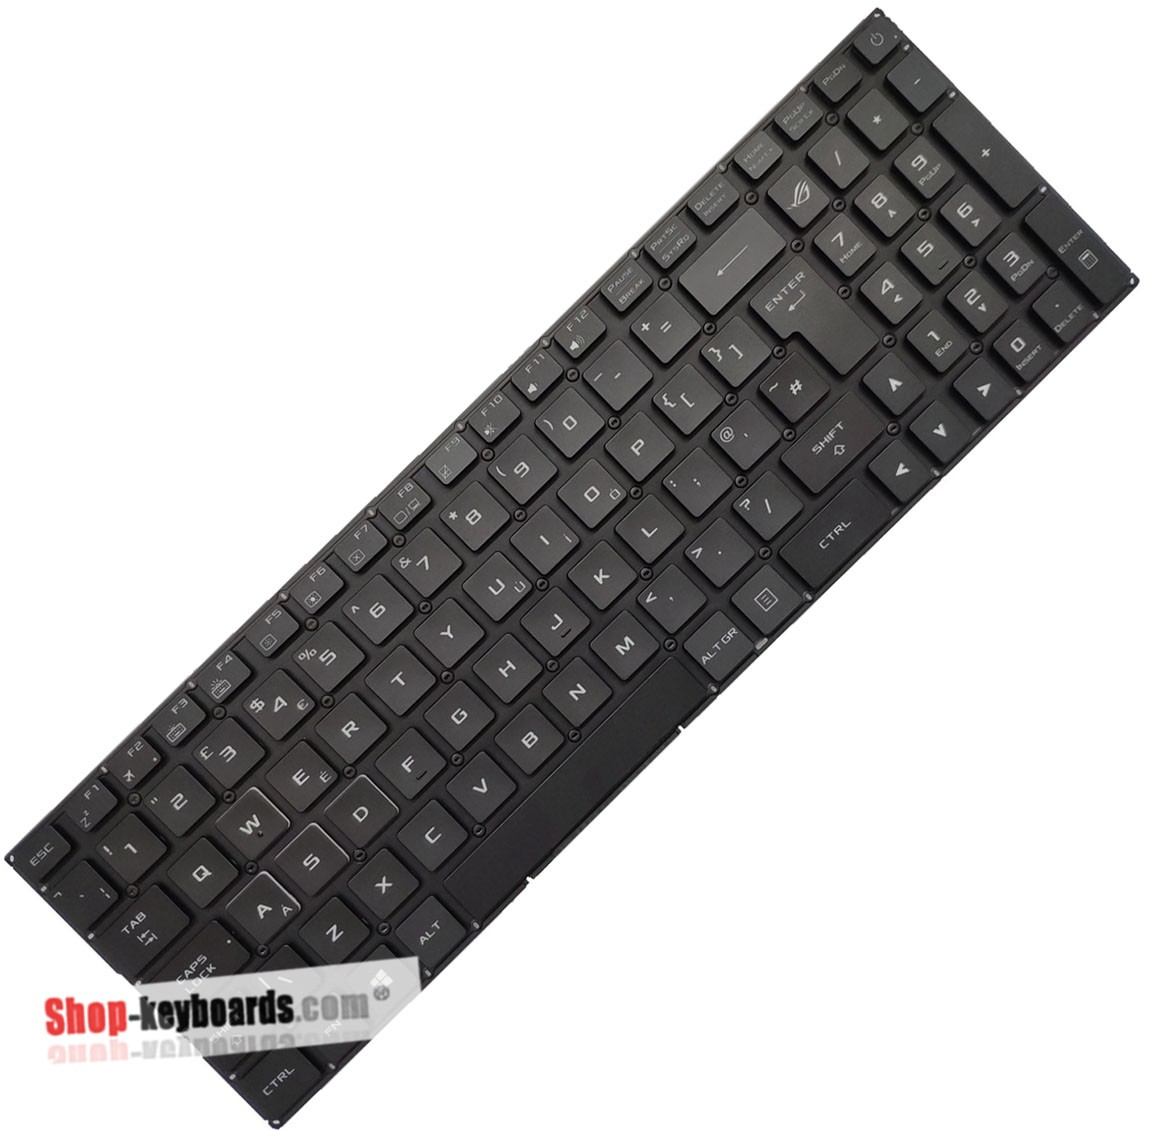 Asus 0KNB0-6612LA00 Keyboard replacement